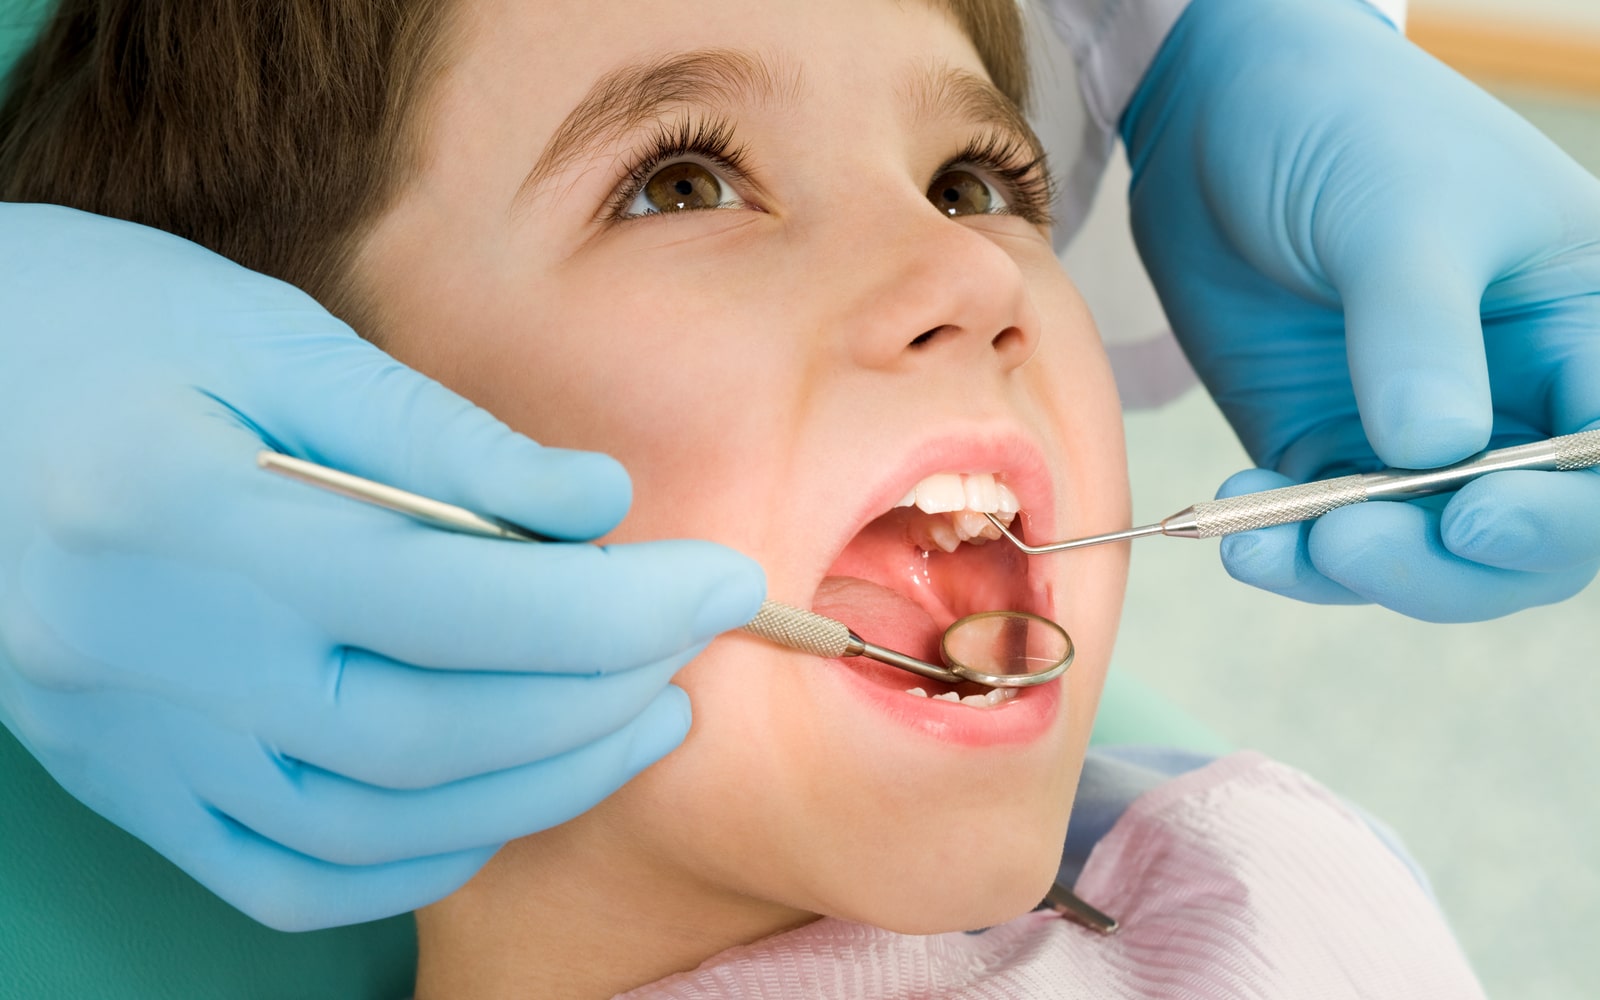 Child Receiving Dental Care Close Up